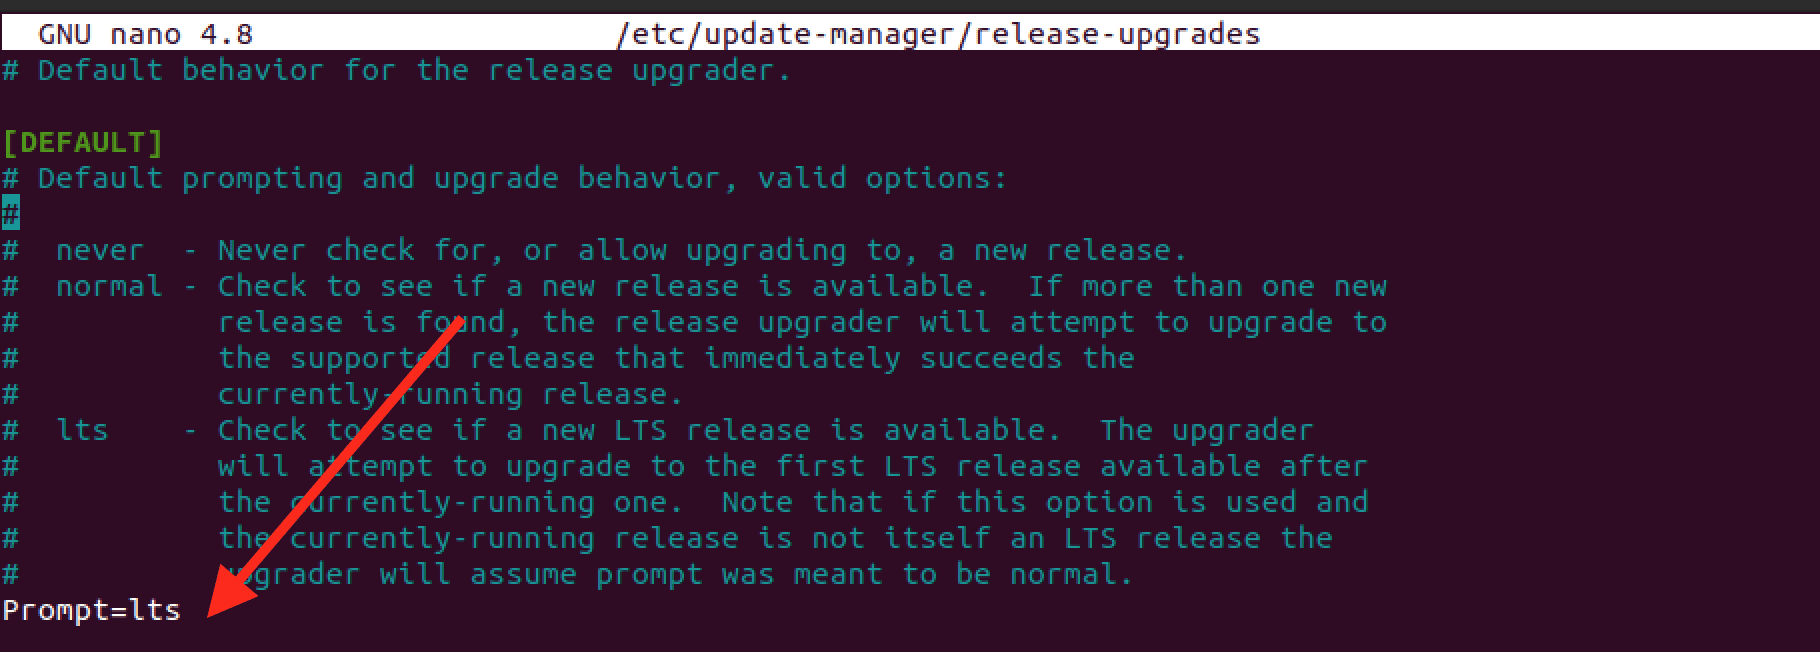 edit release upgrades file